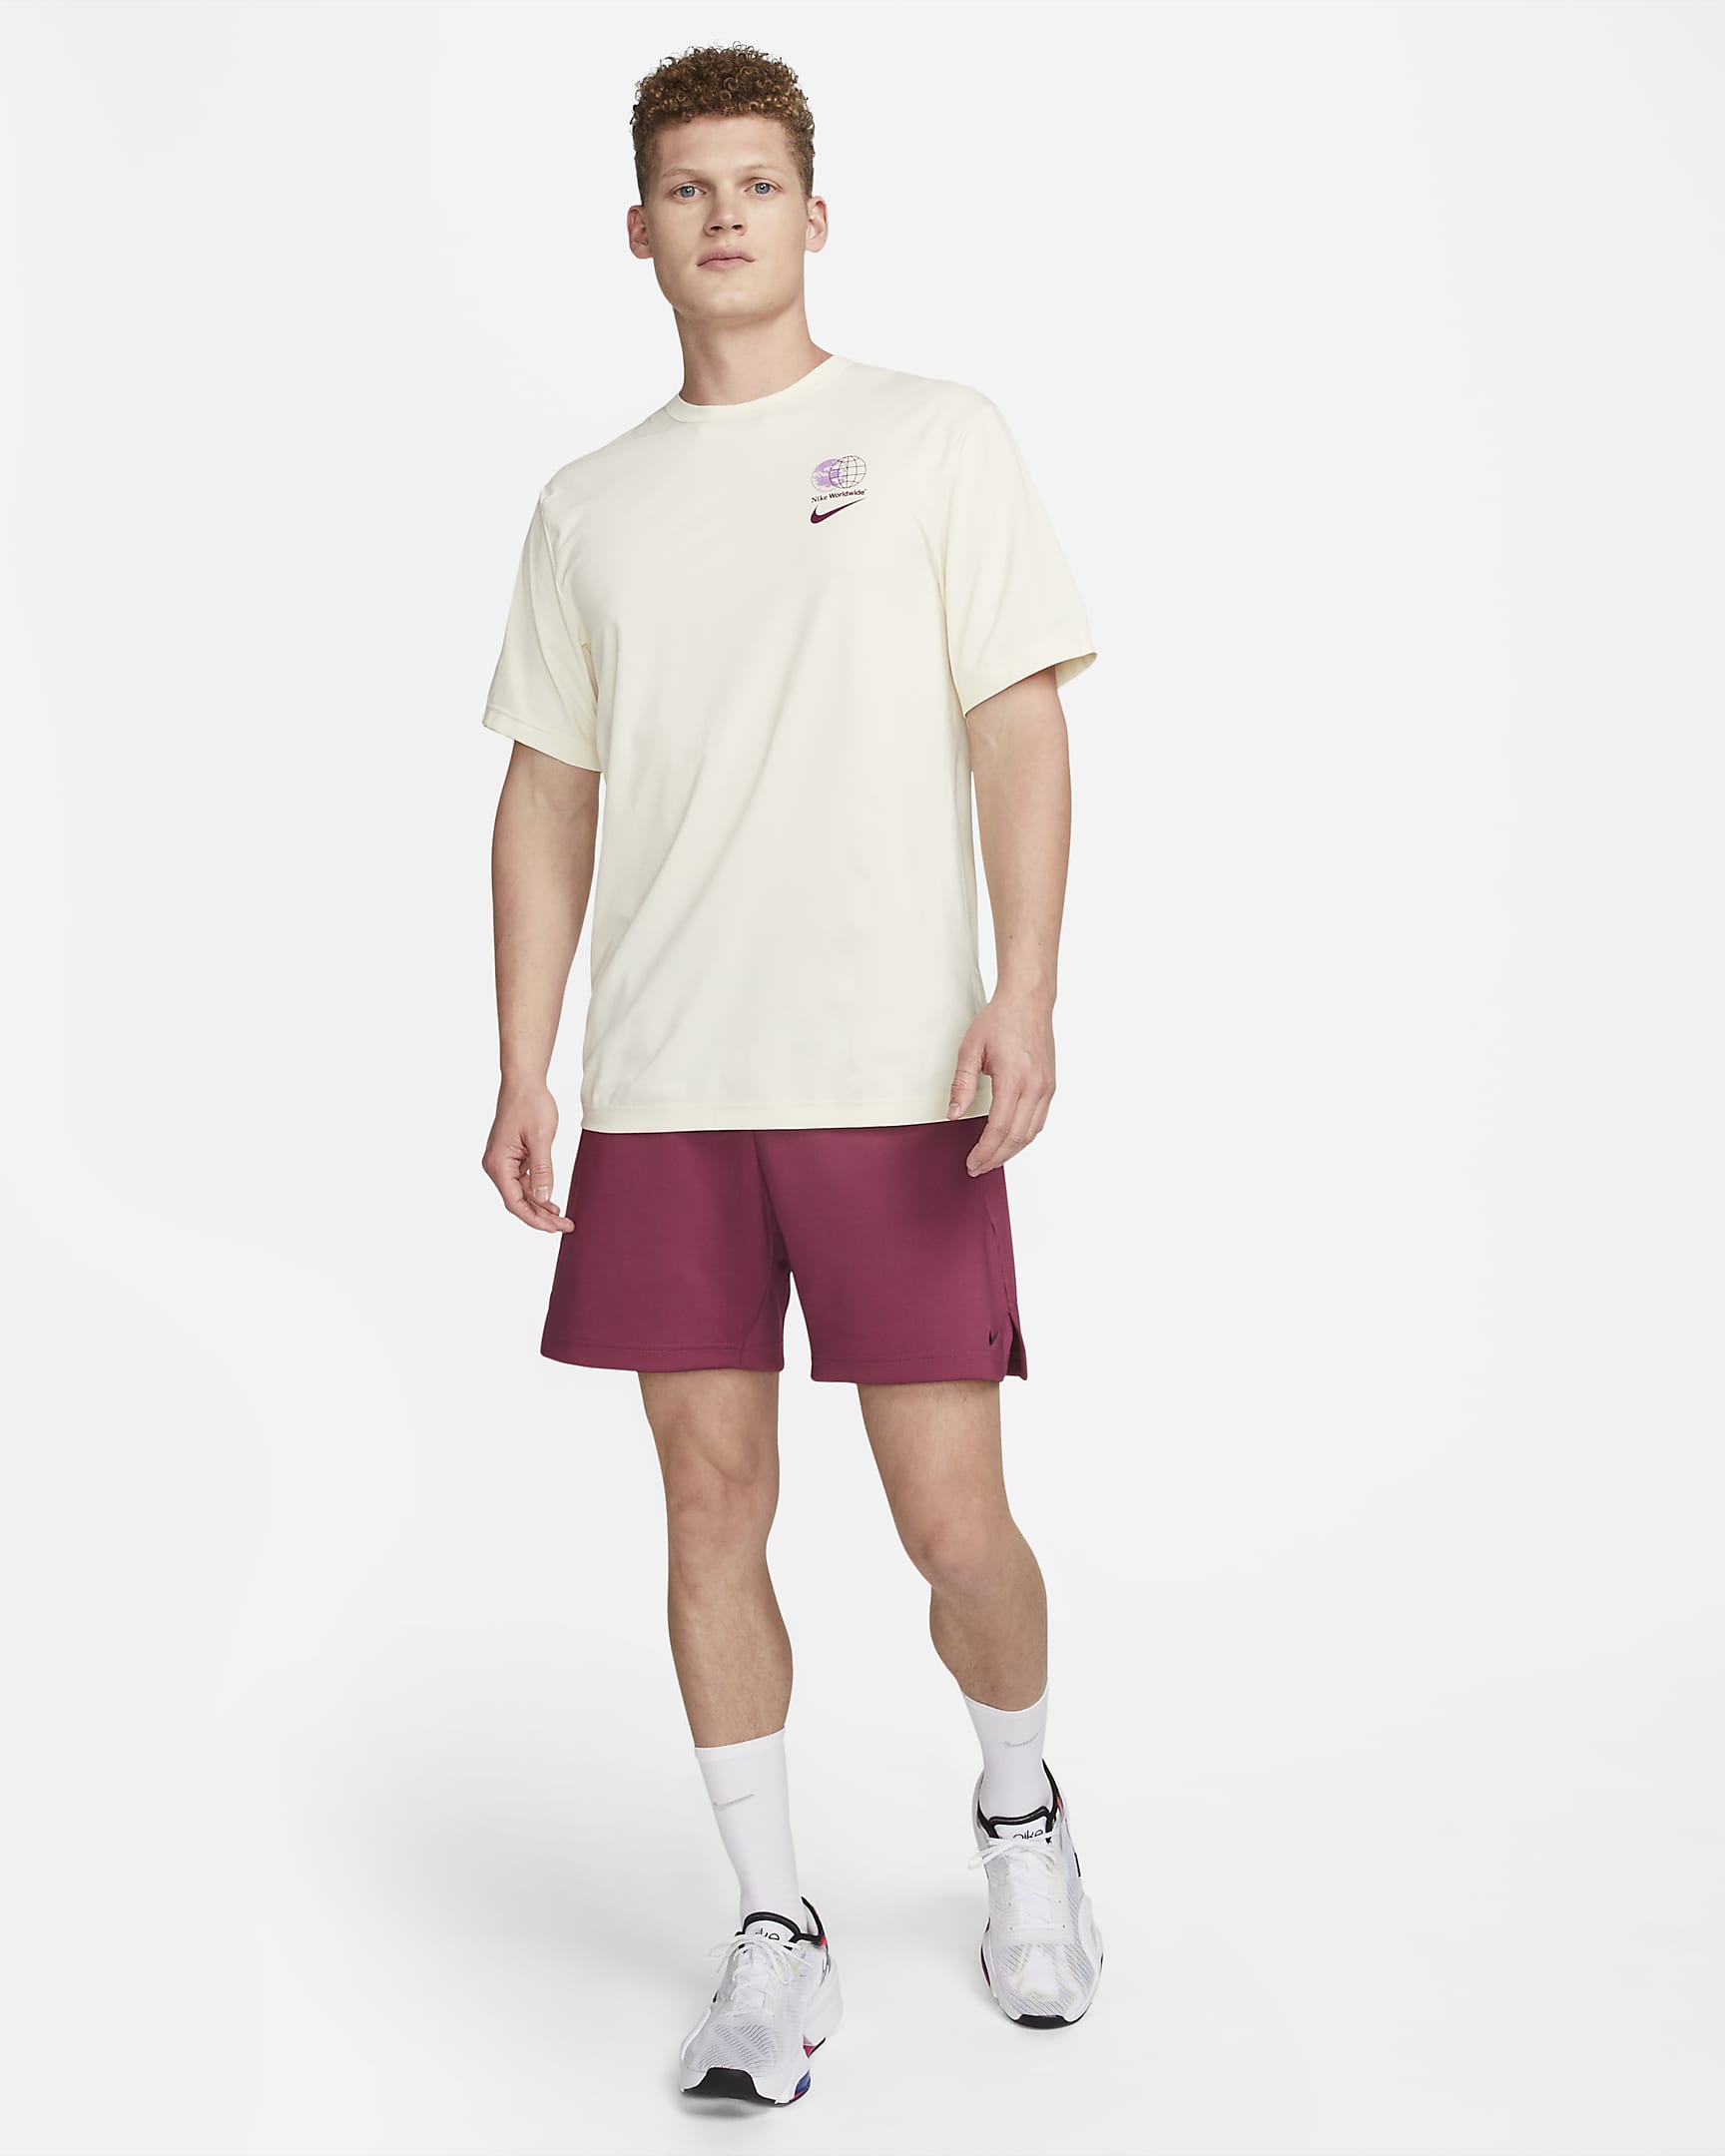 Nike Dri-FIT UV Hyverse Men's Short-Sleeve Graphic Fitness Top. Nike SI